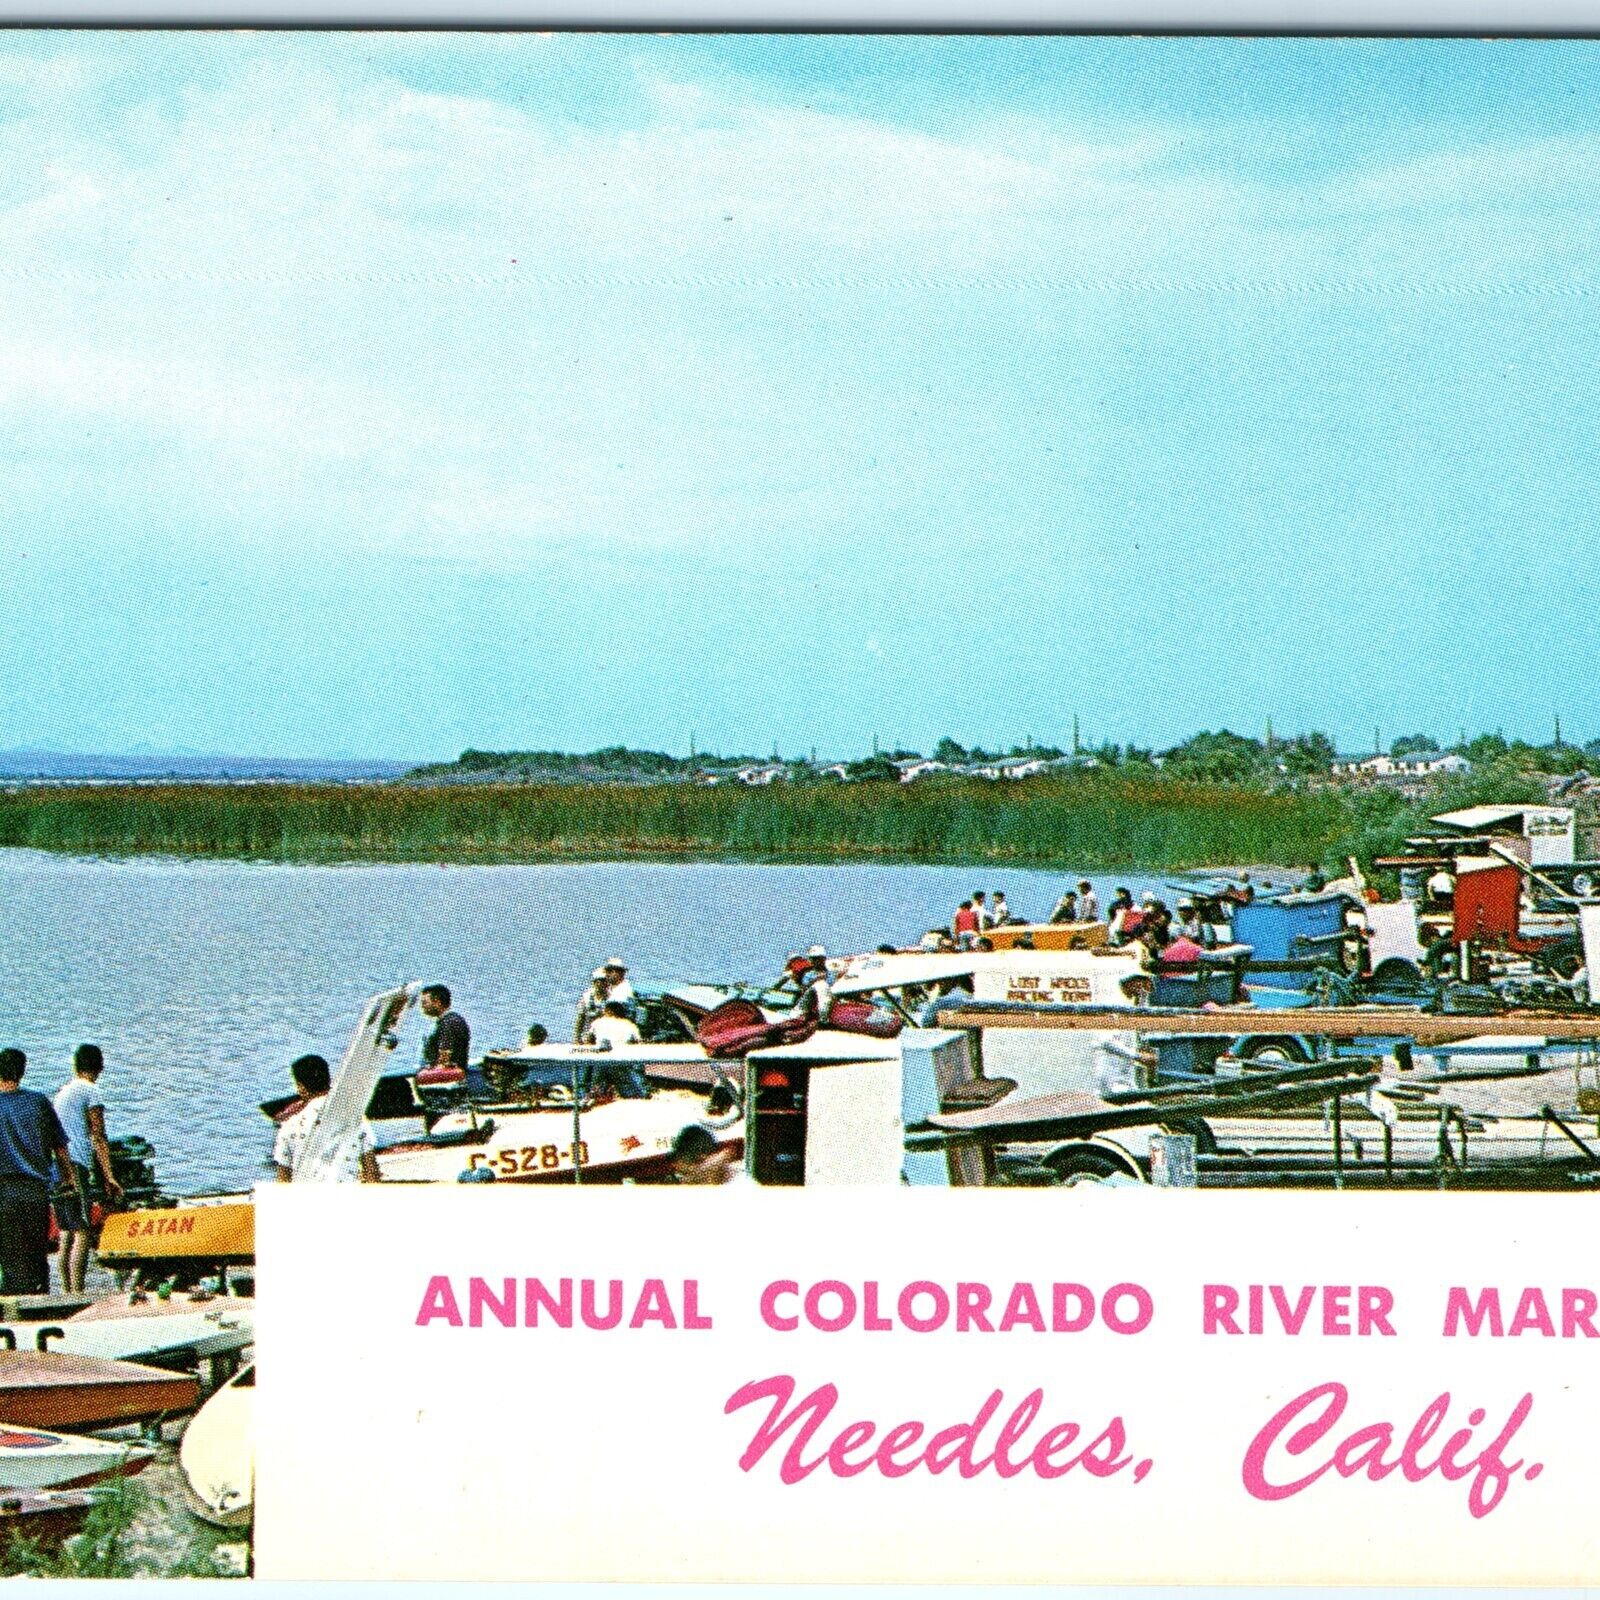 c1950s Needles, CA Annual Colorado River Marathon Chrome Photo Postcard Boat A89